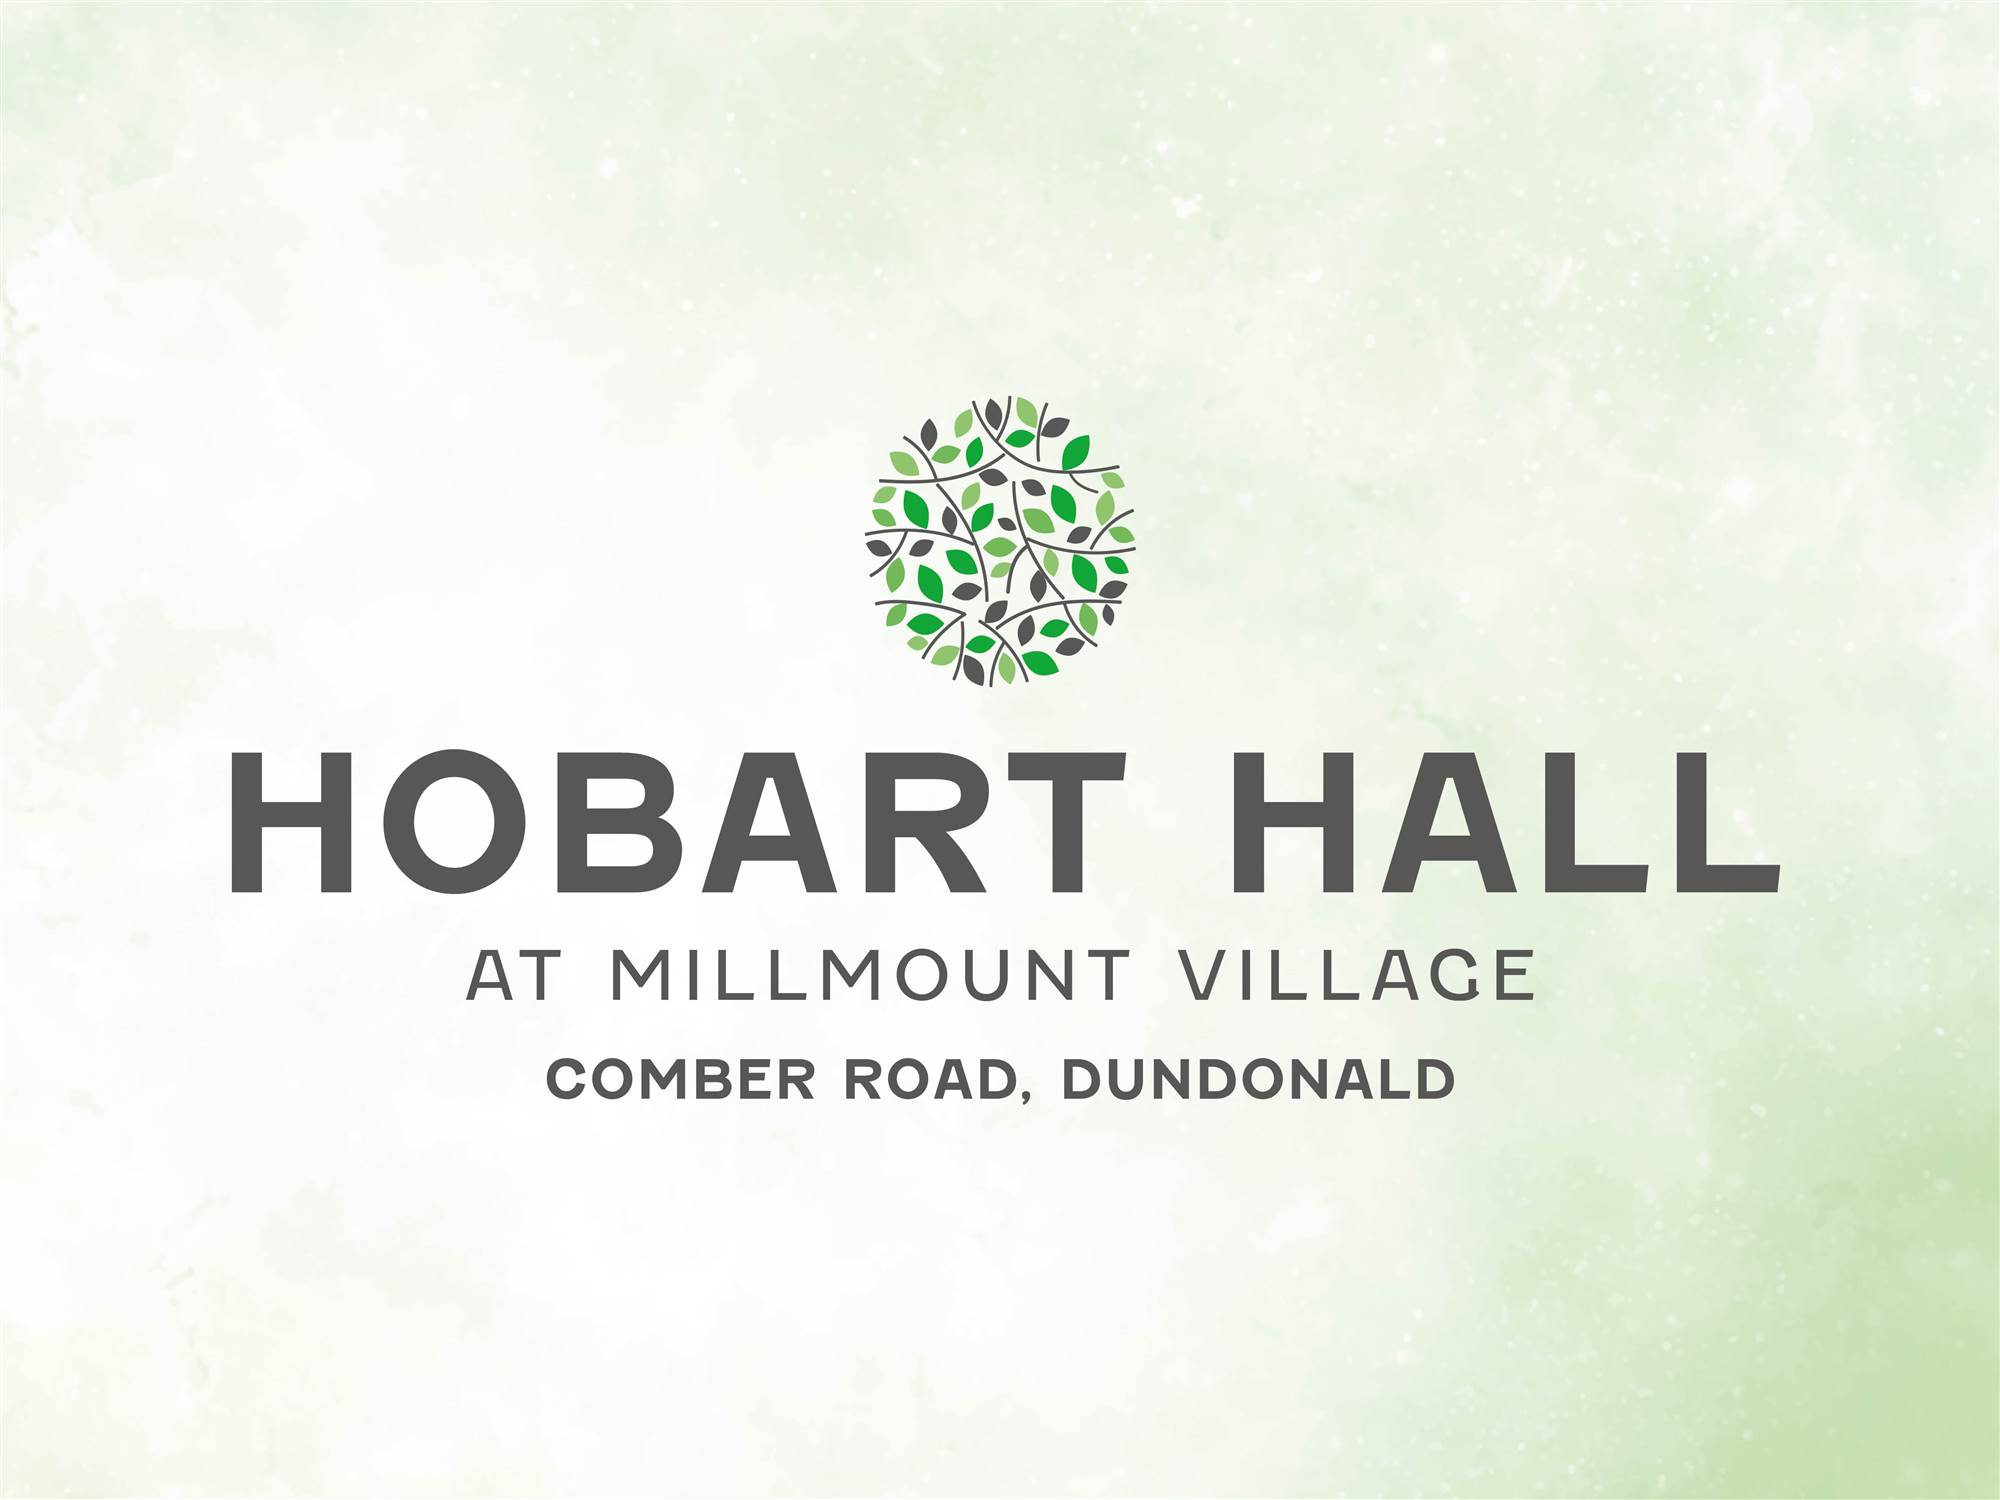 8 Hobart Hall at Millmount Village